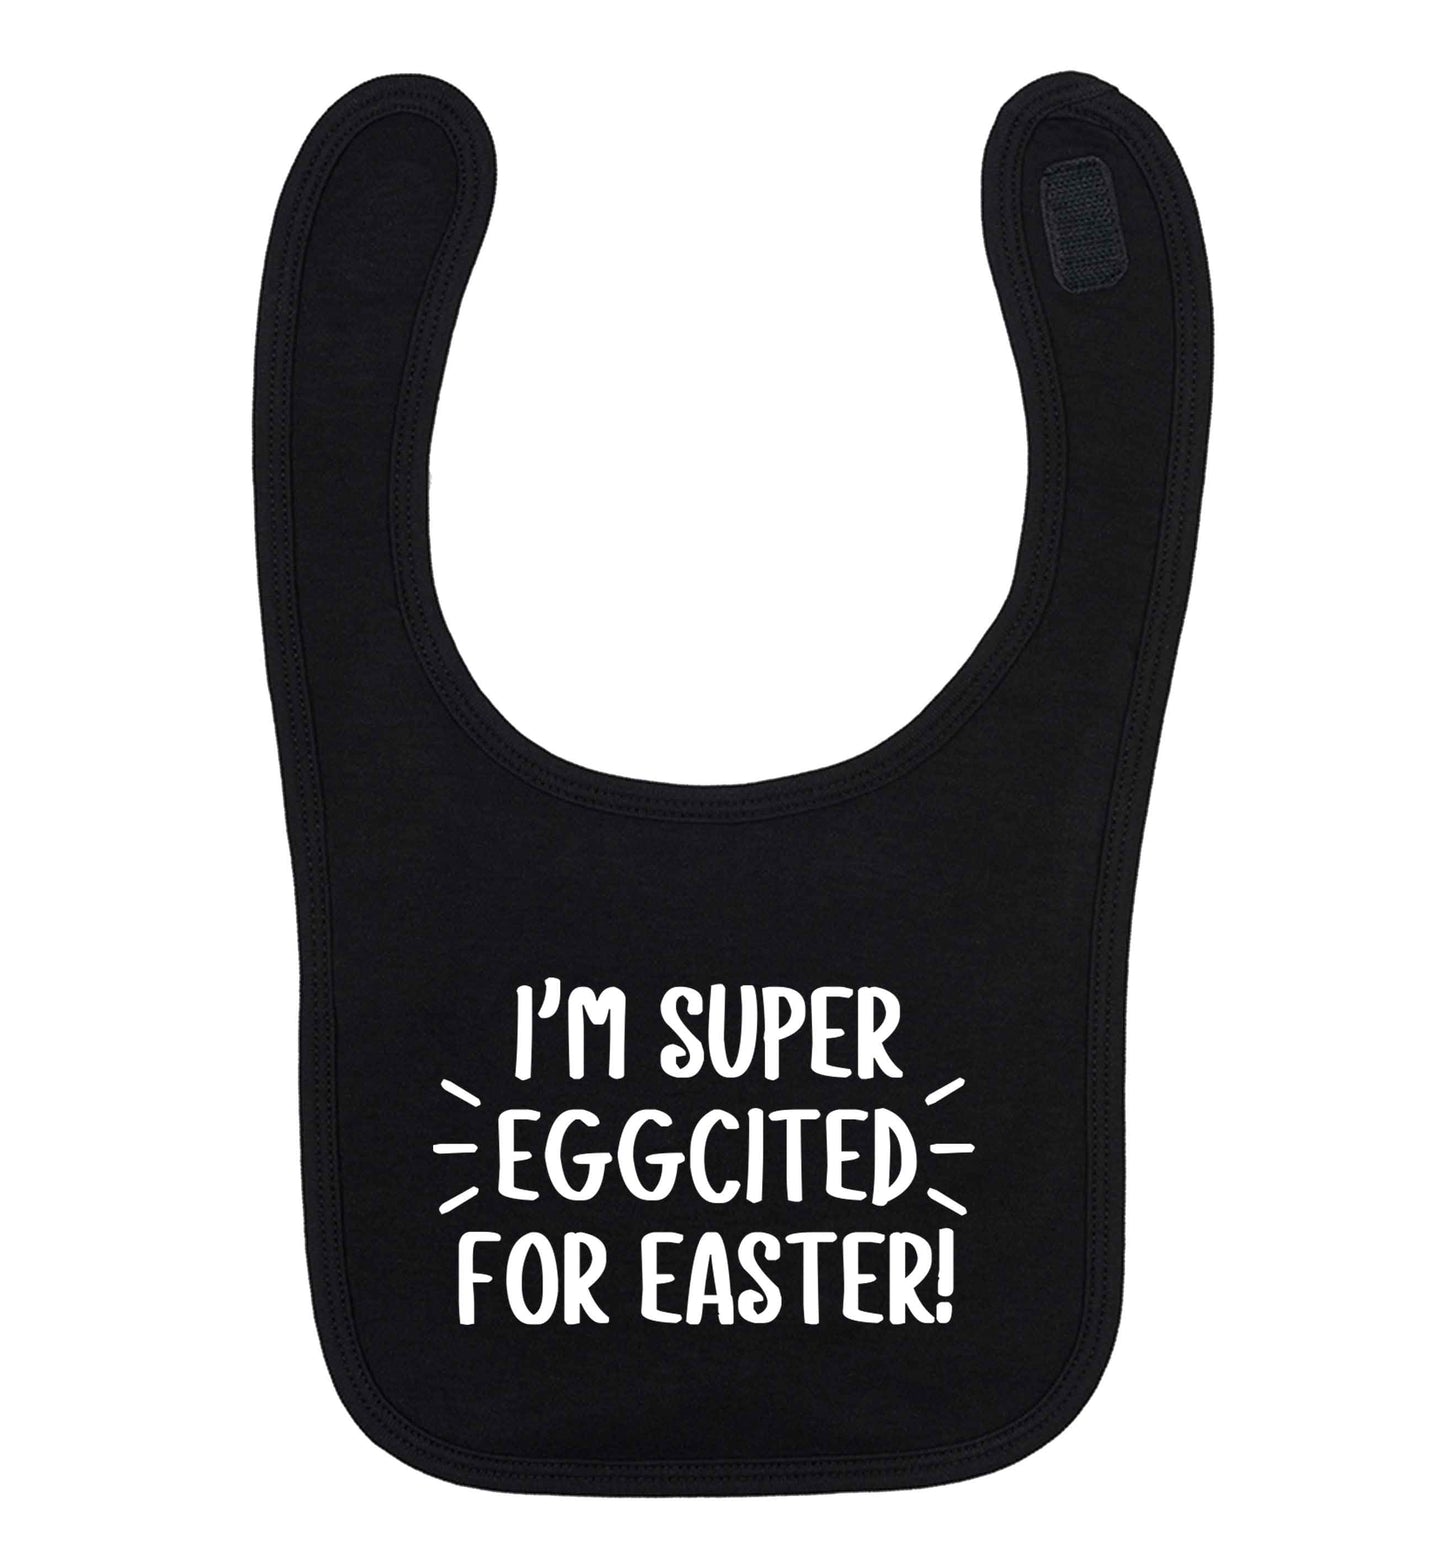 I'm super eggcited for Easter black baby bib